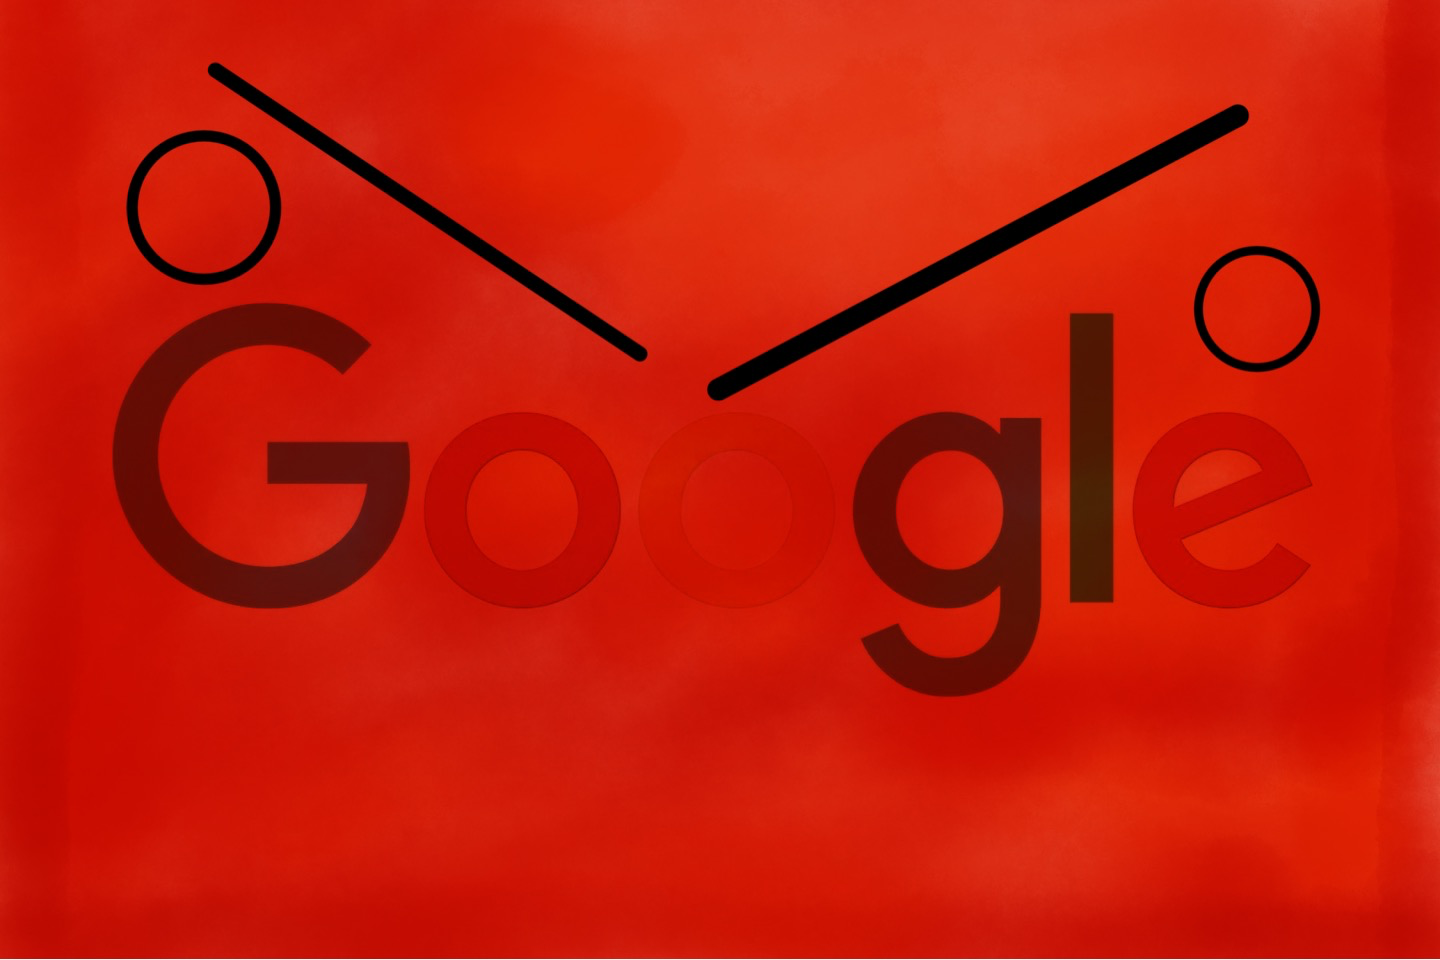 Google - Full Logo [SUPER MAD]